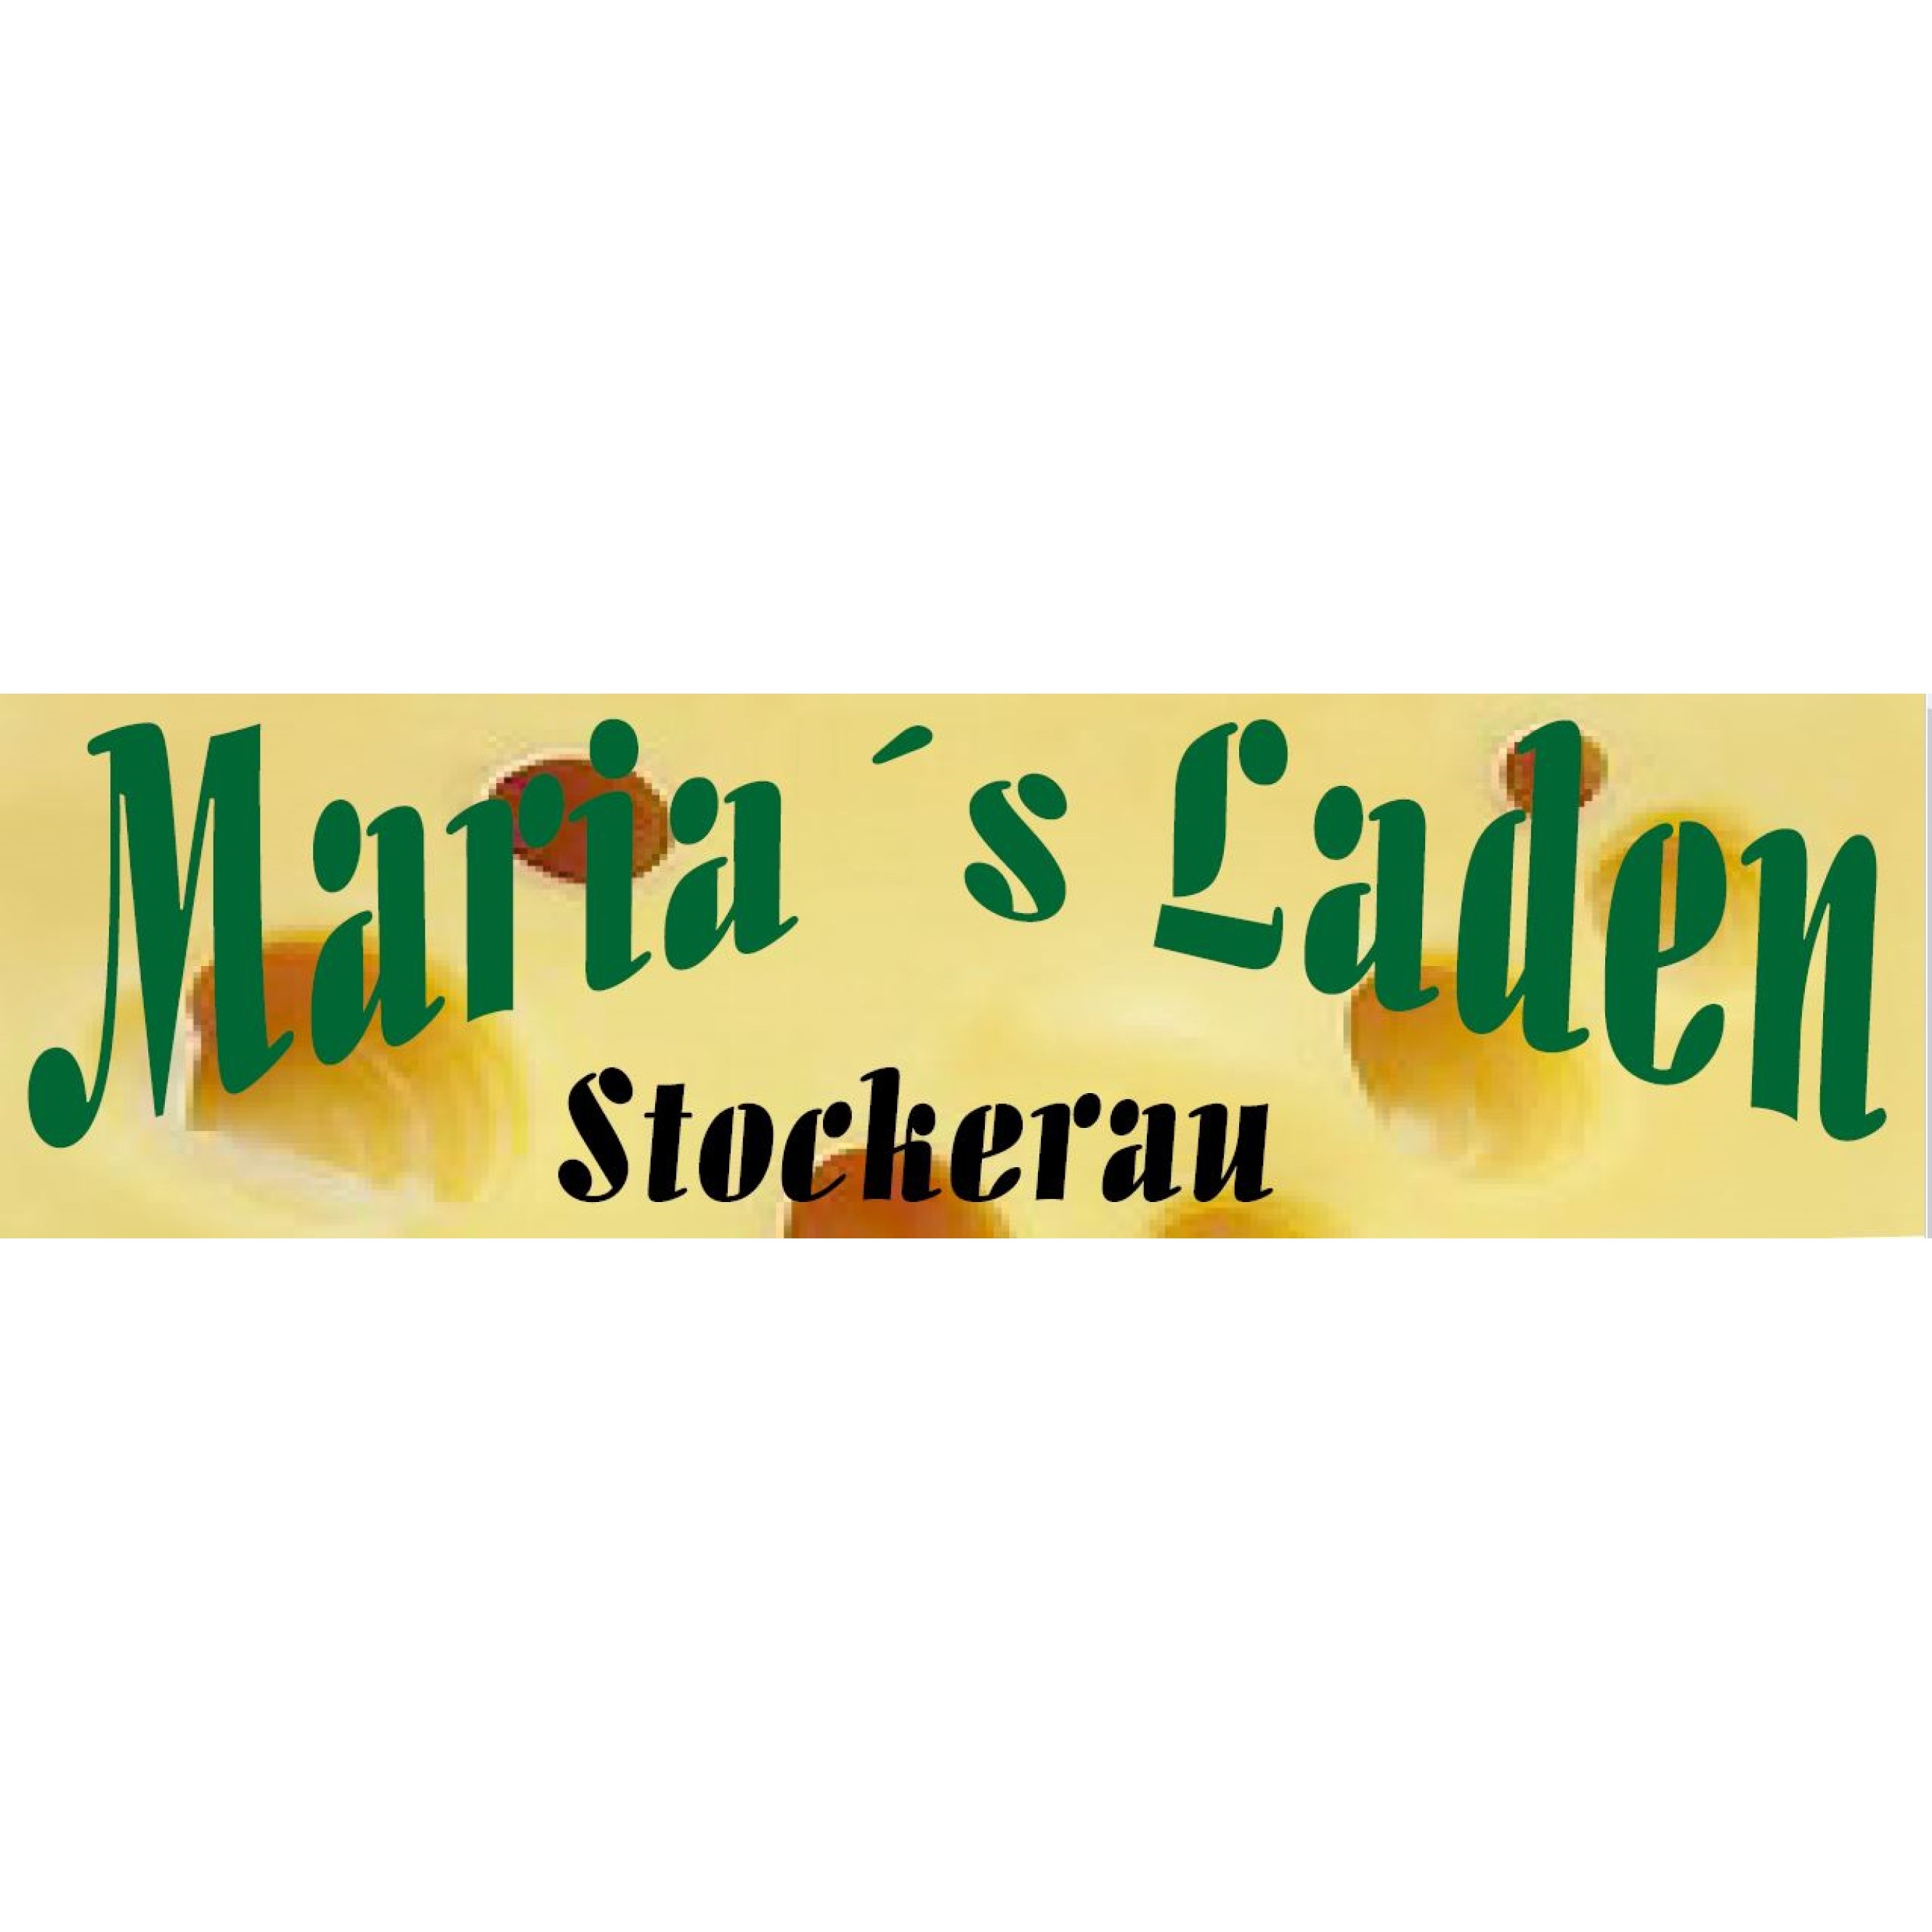 Maria's Laden in 2000 Stockerau Logo